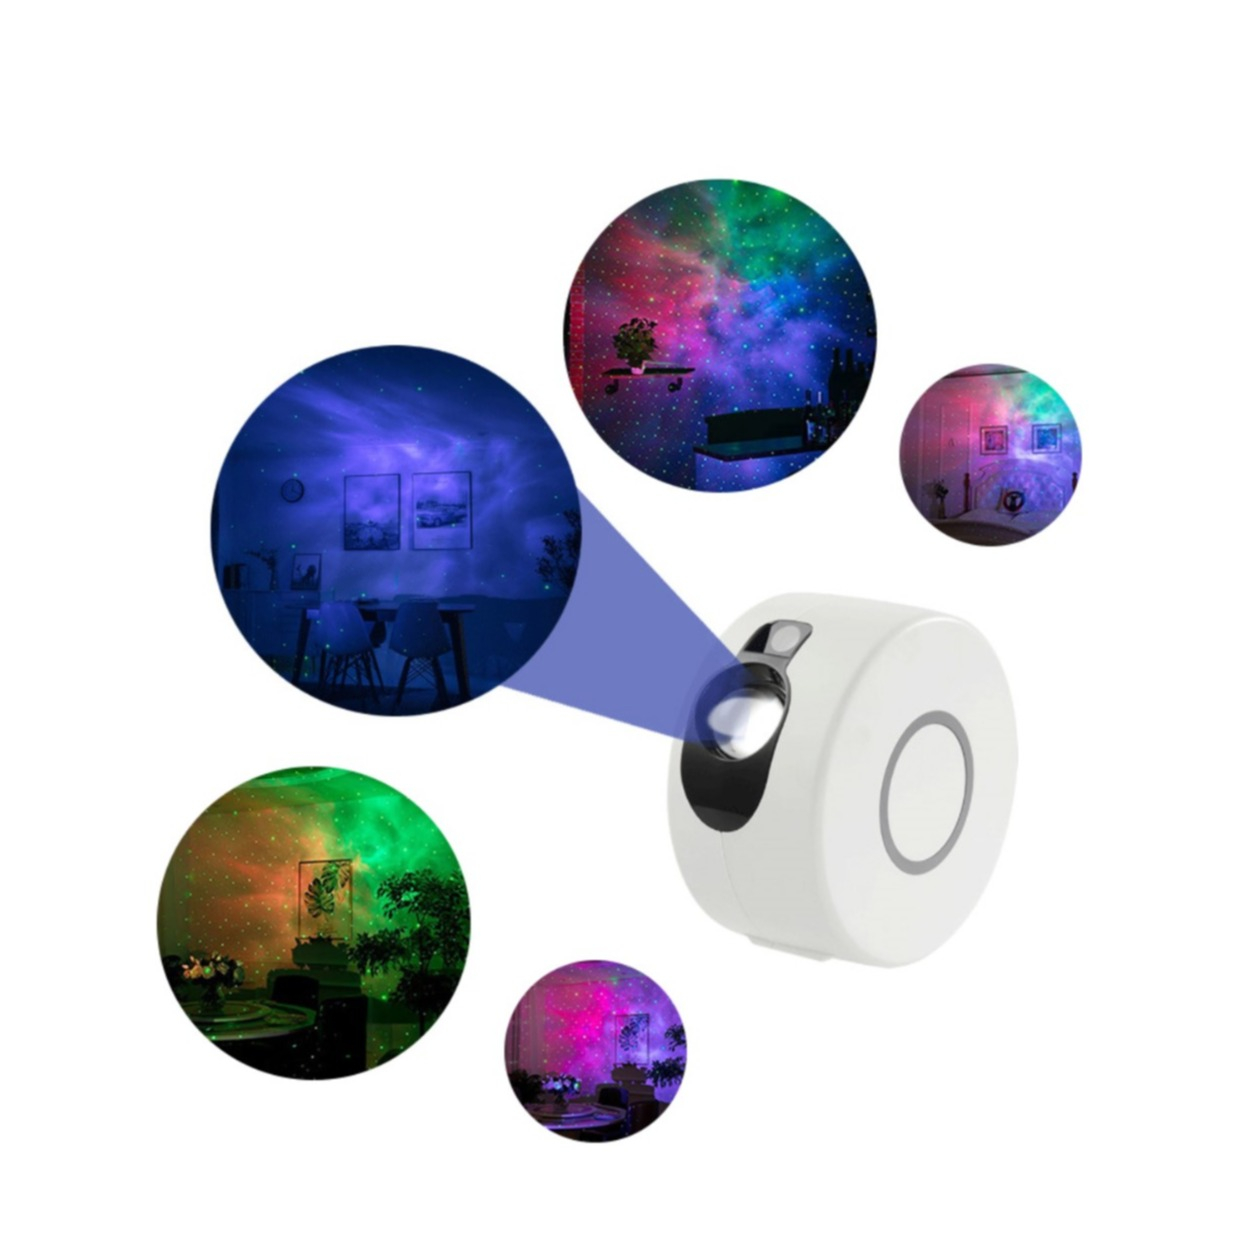 https://www.apfelkiste.ch/media/catalog/product/s/c/usb-galaxy-projektor-lichter-led-multicolor-projektionslampe-fernbedienung-weiss_4.jpg